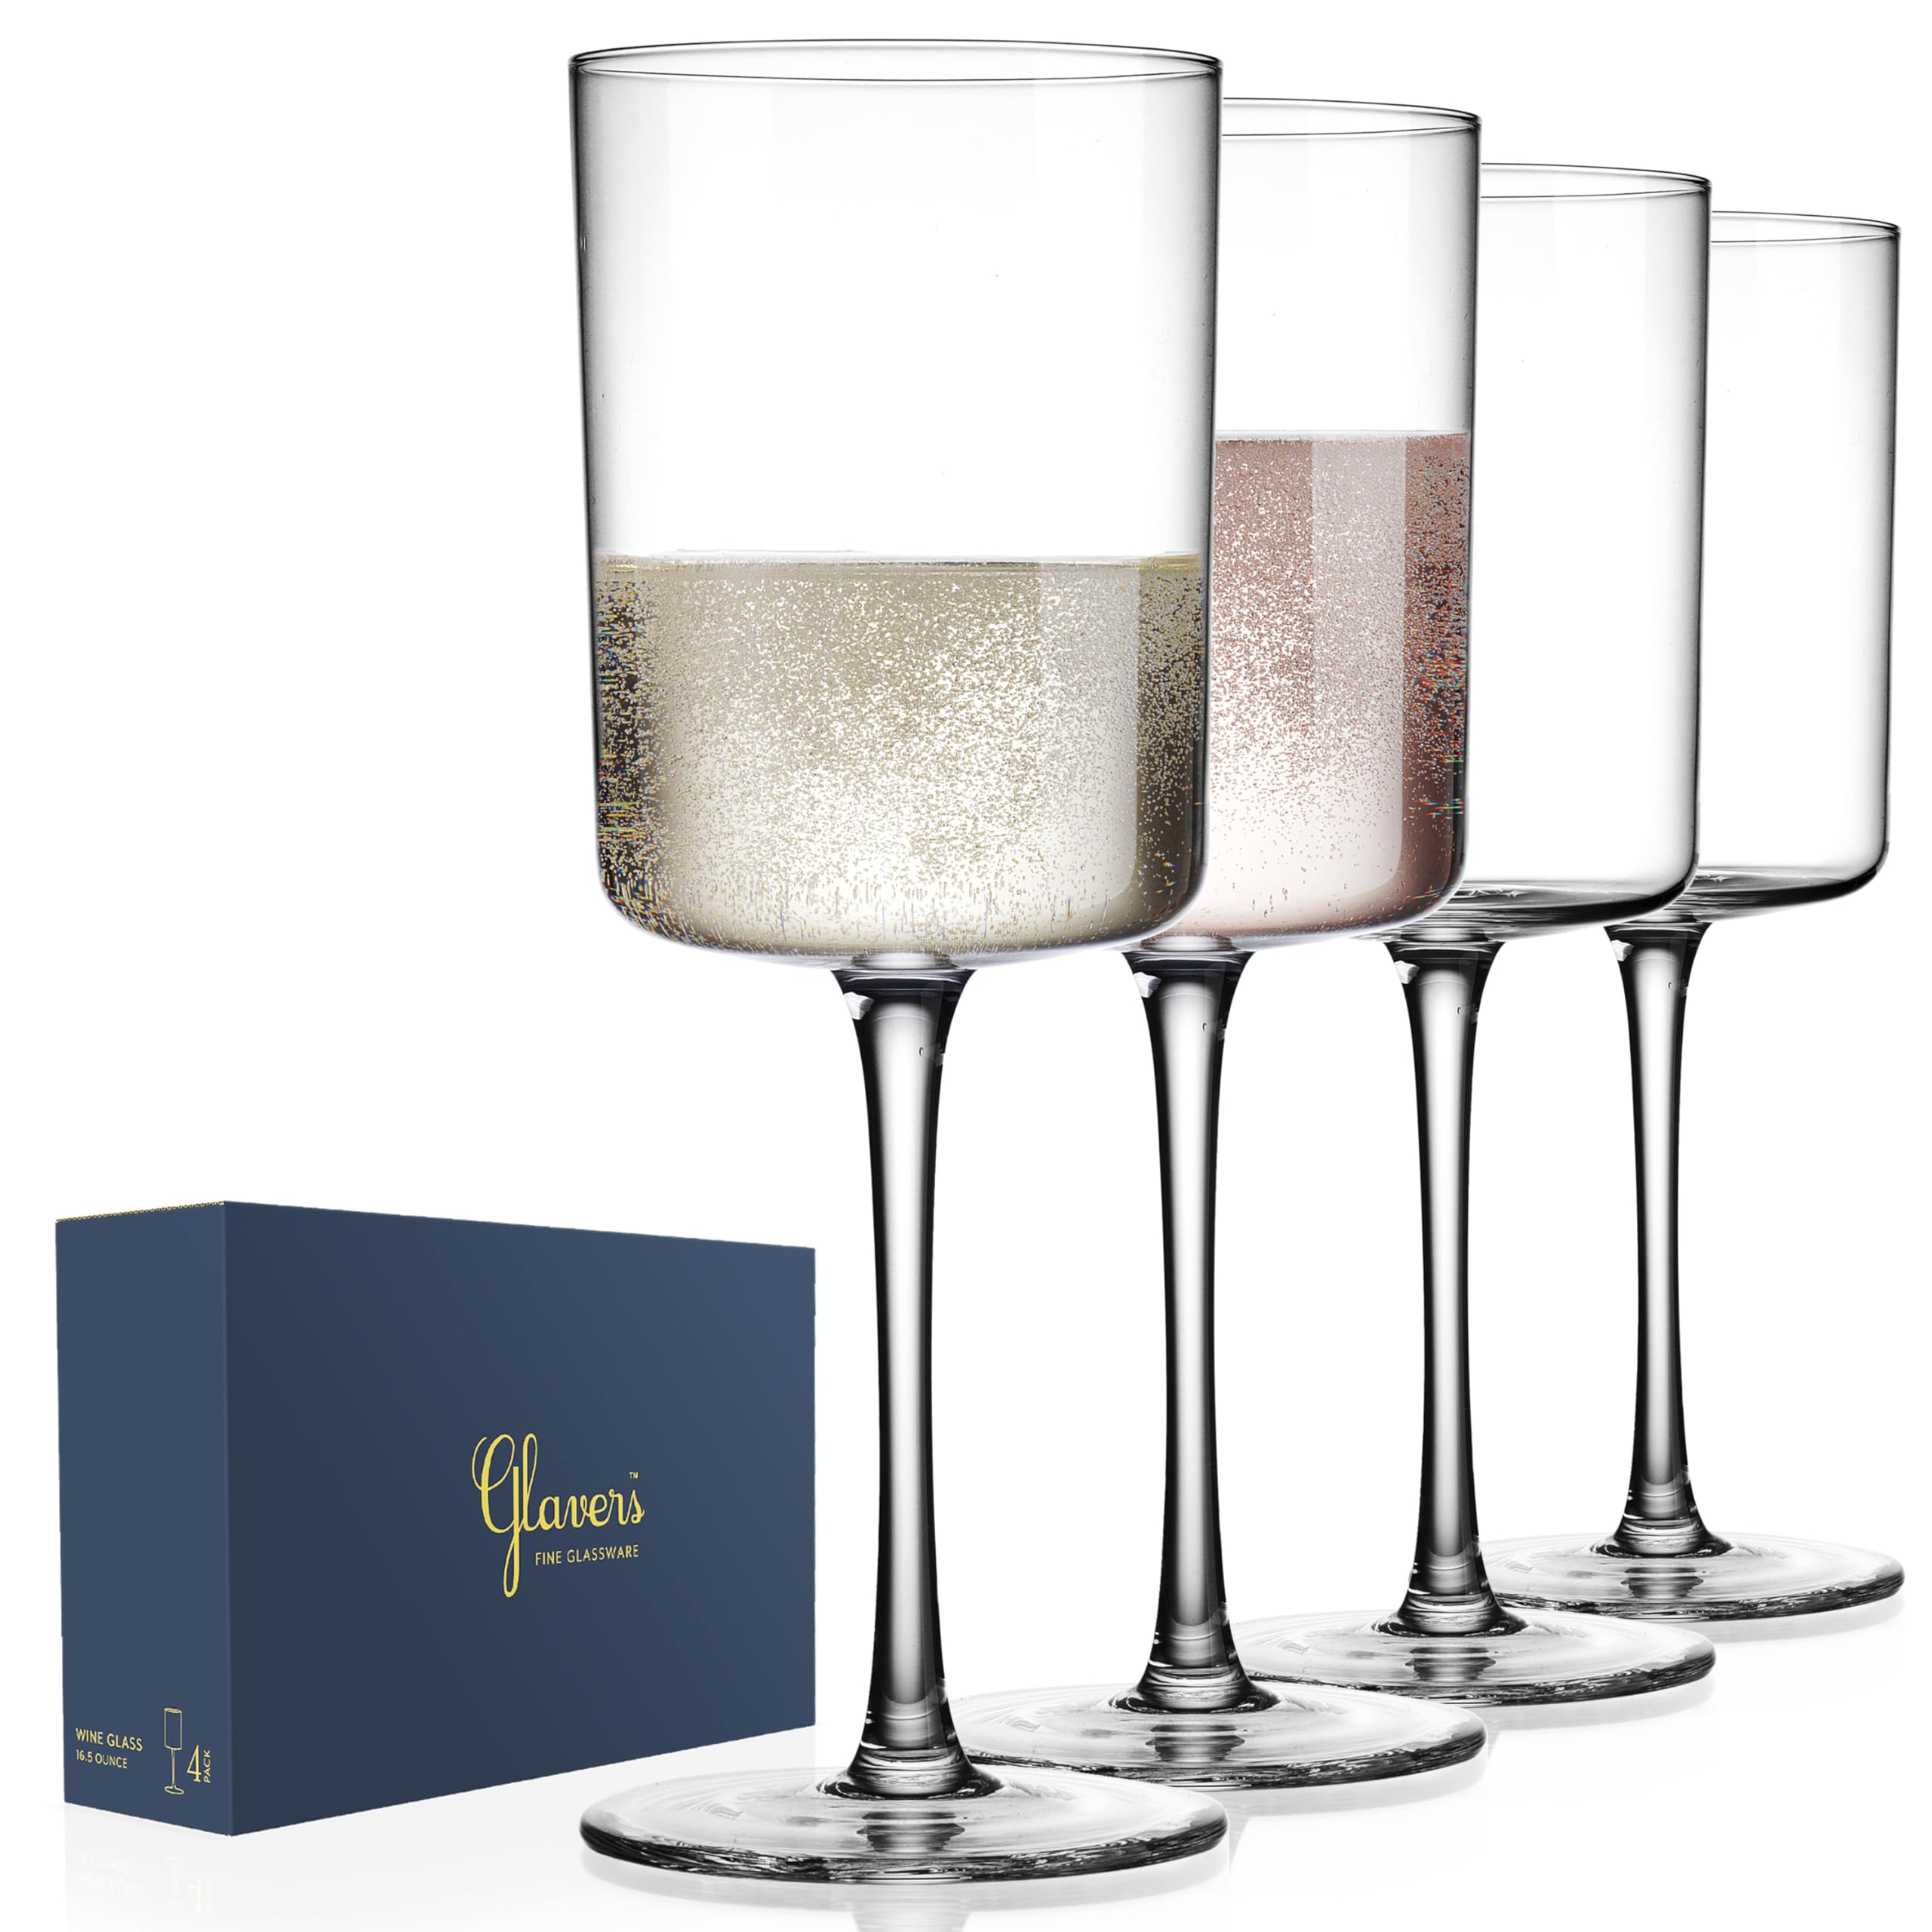 Square Wine Glasses Set of 4, Crystal Stemmed Modern Wine Glasses 16 Oz, Tall Thin Rim, Large Wine Glasses For Red and White Wine, Elegant Gifting Packaging, Dishwasher Safe. Snifter  - Like New